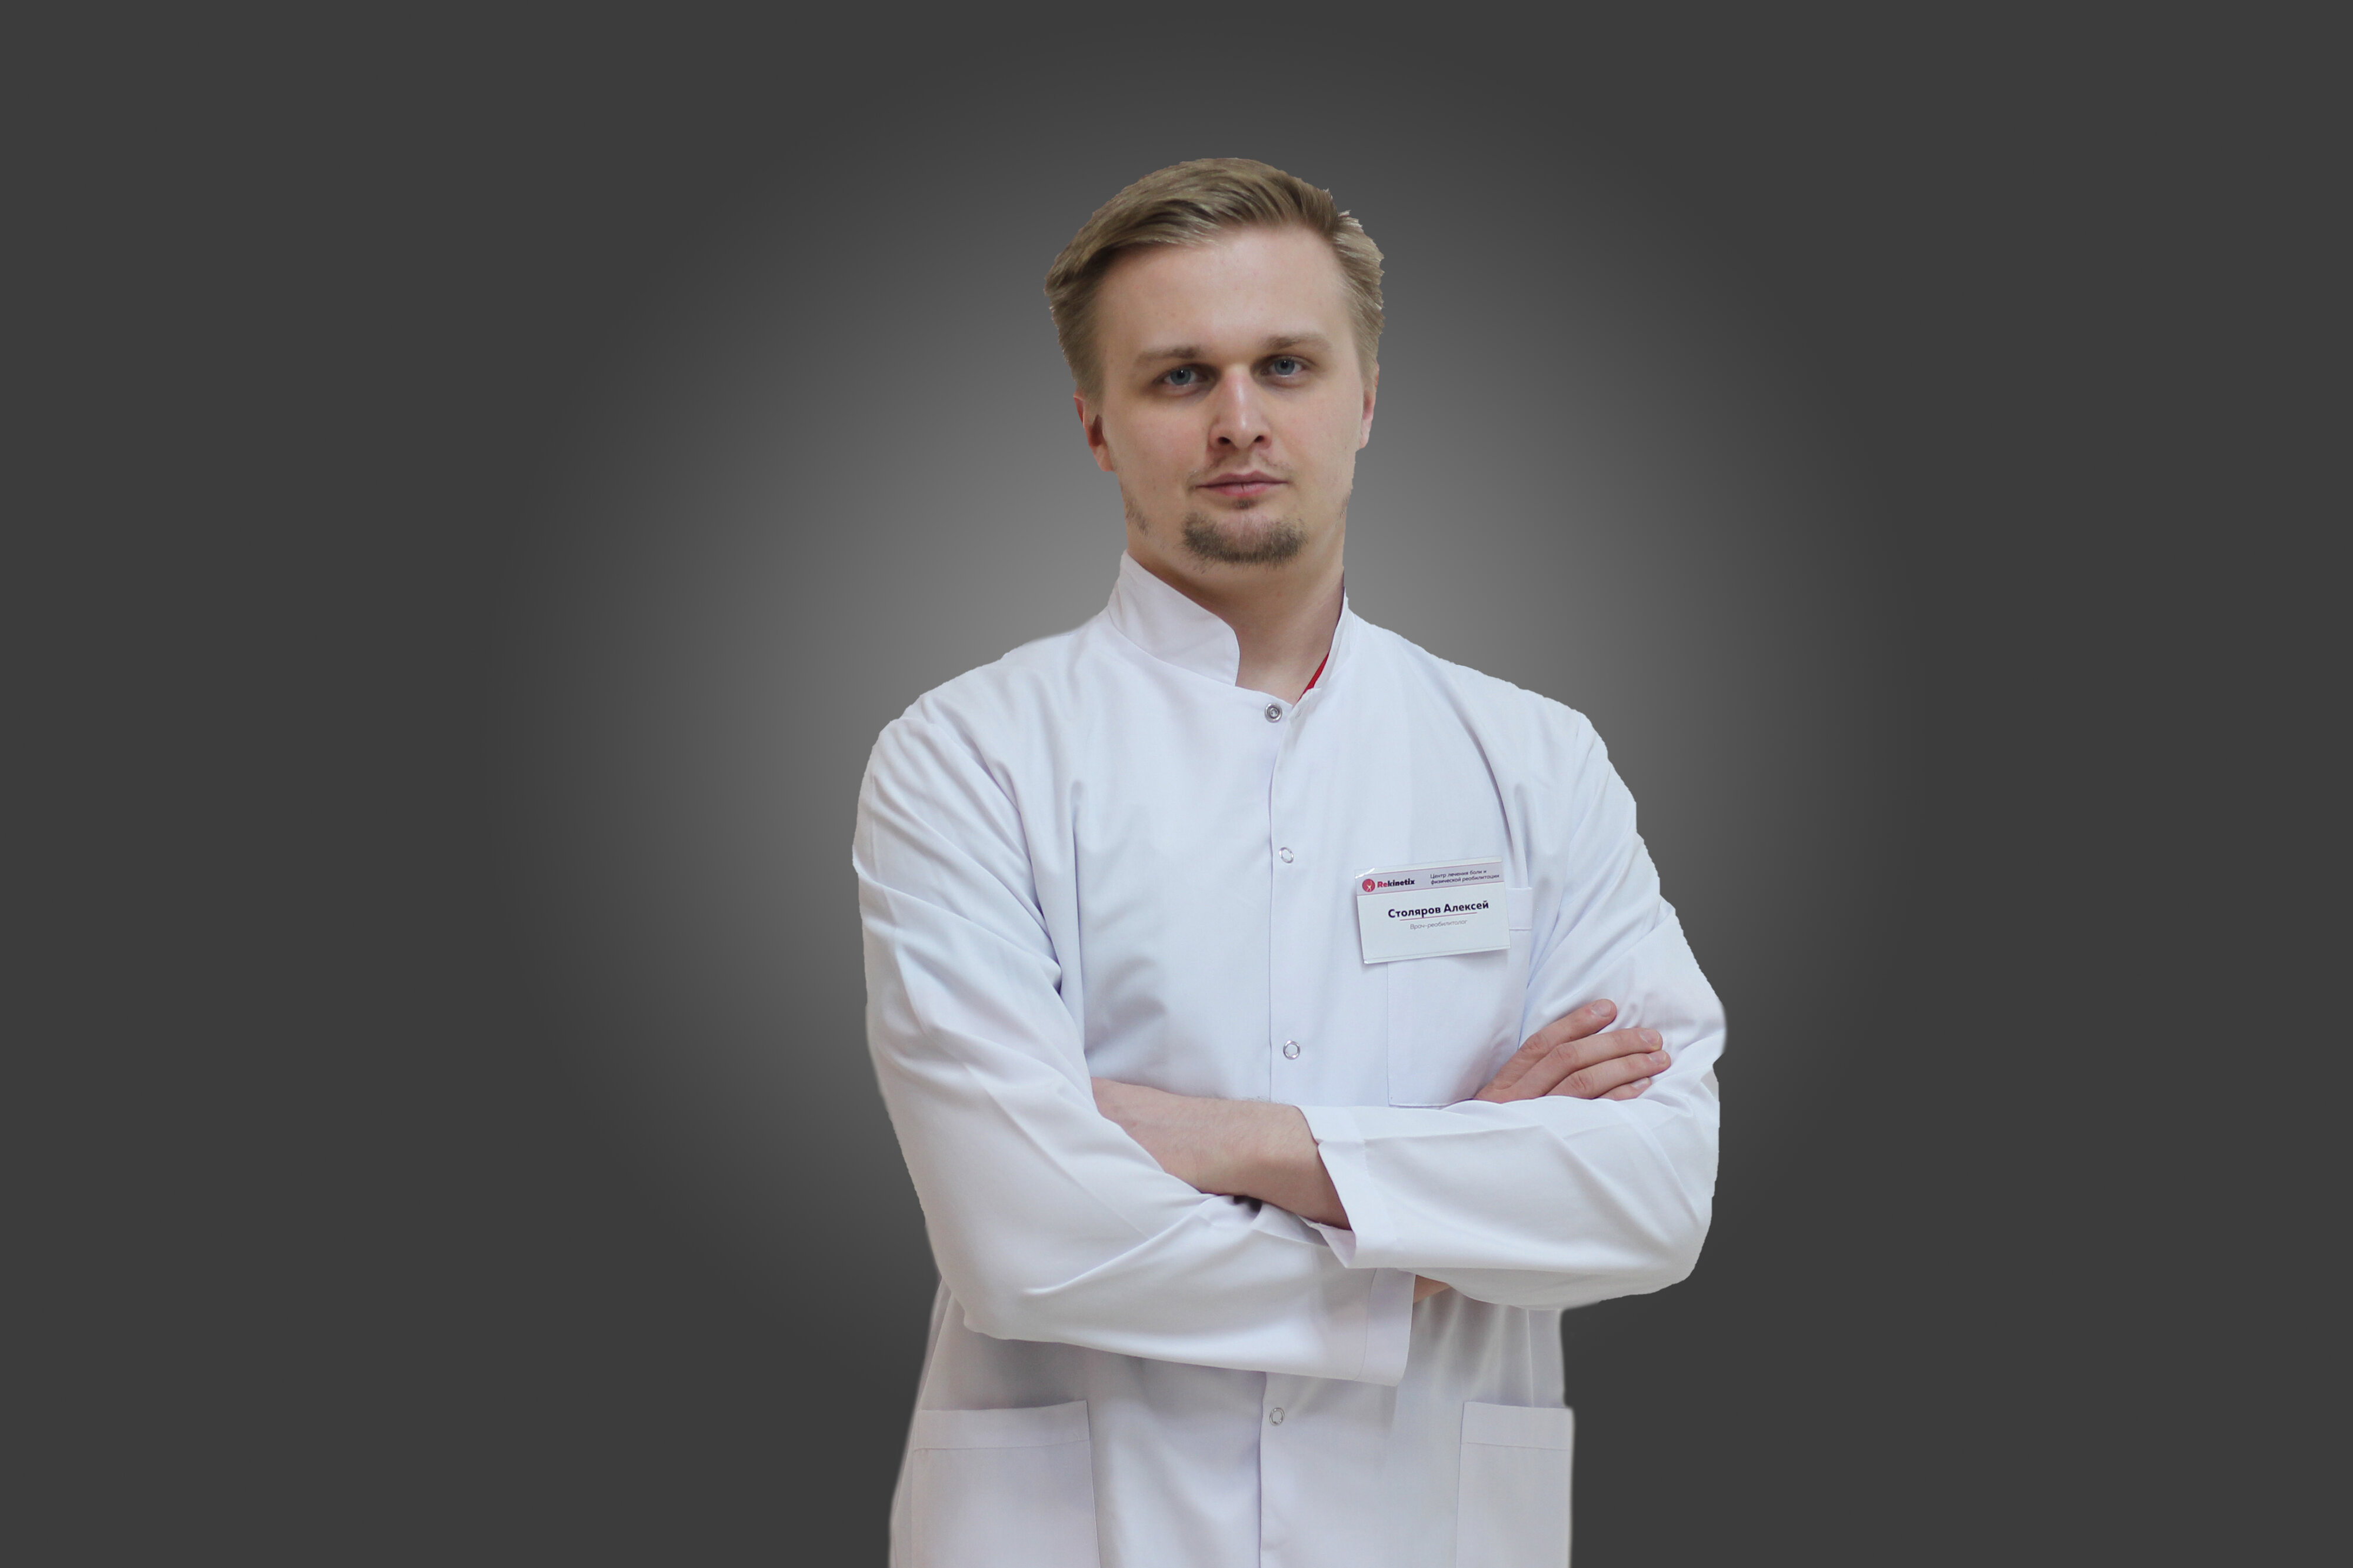 Столярова врач по спортивной медицине.